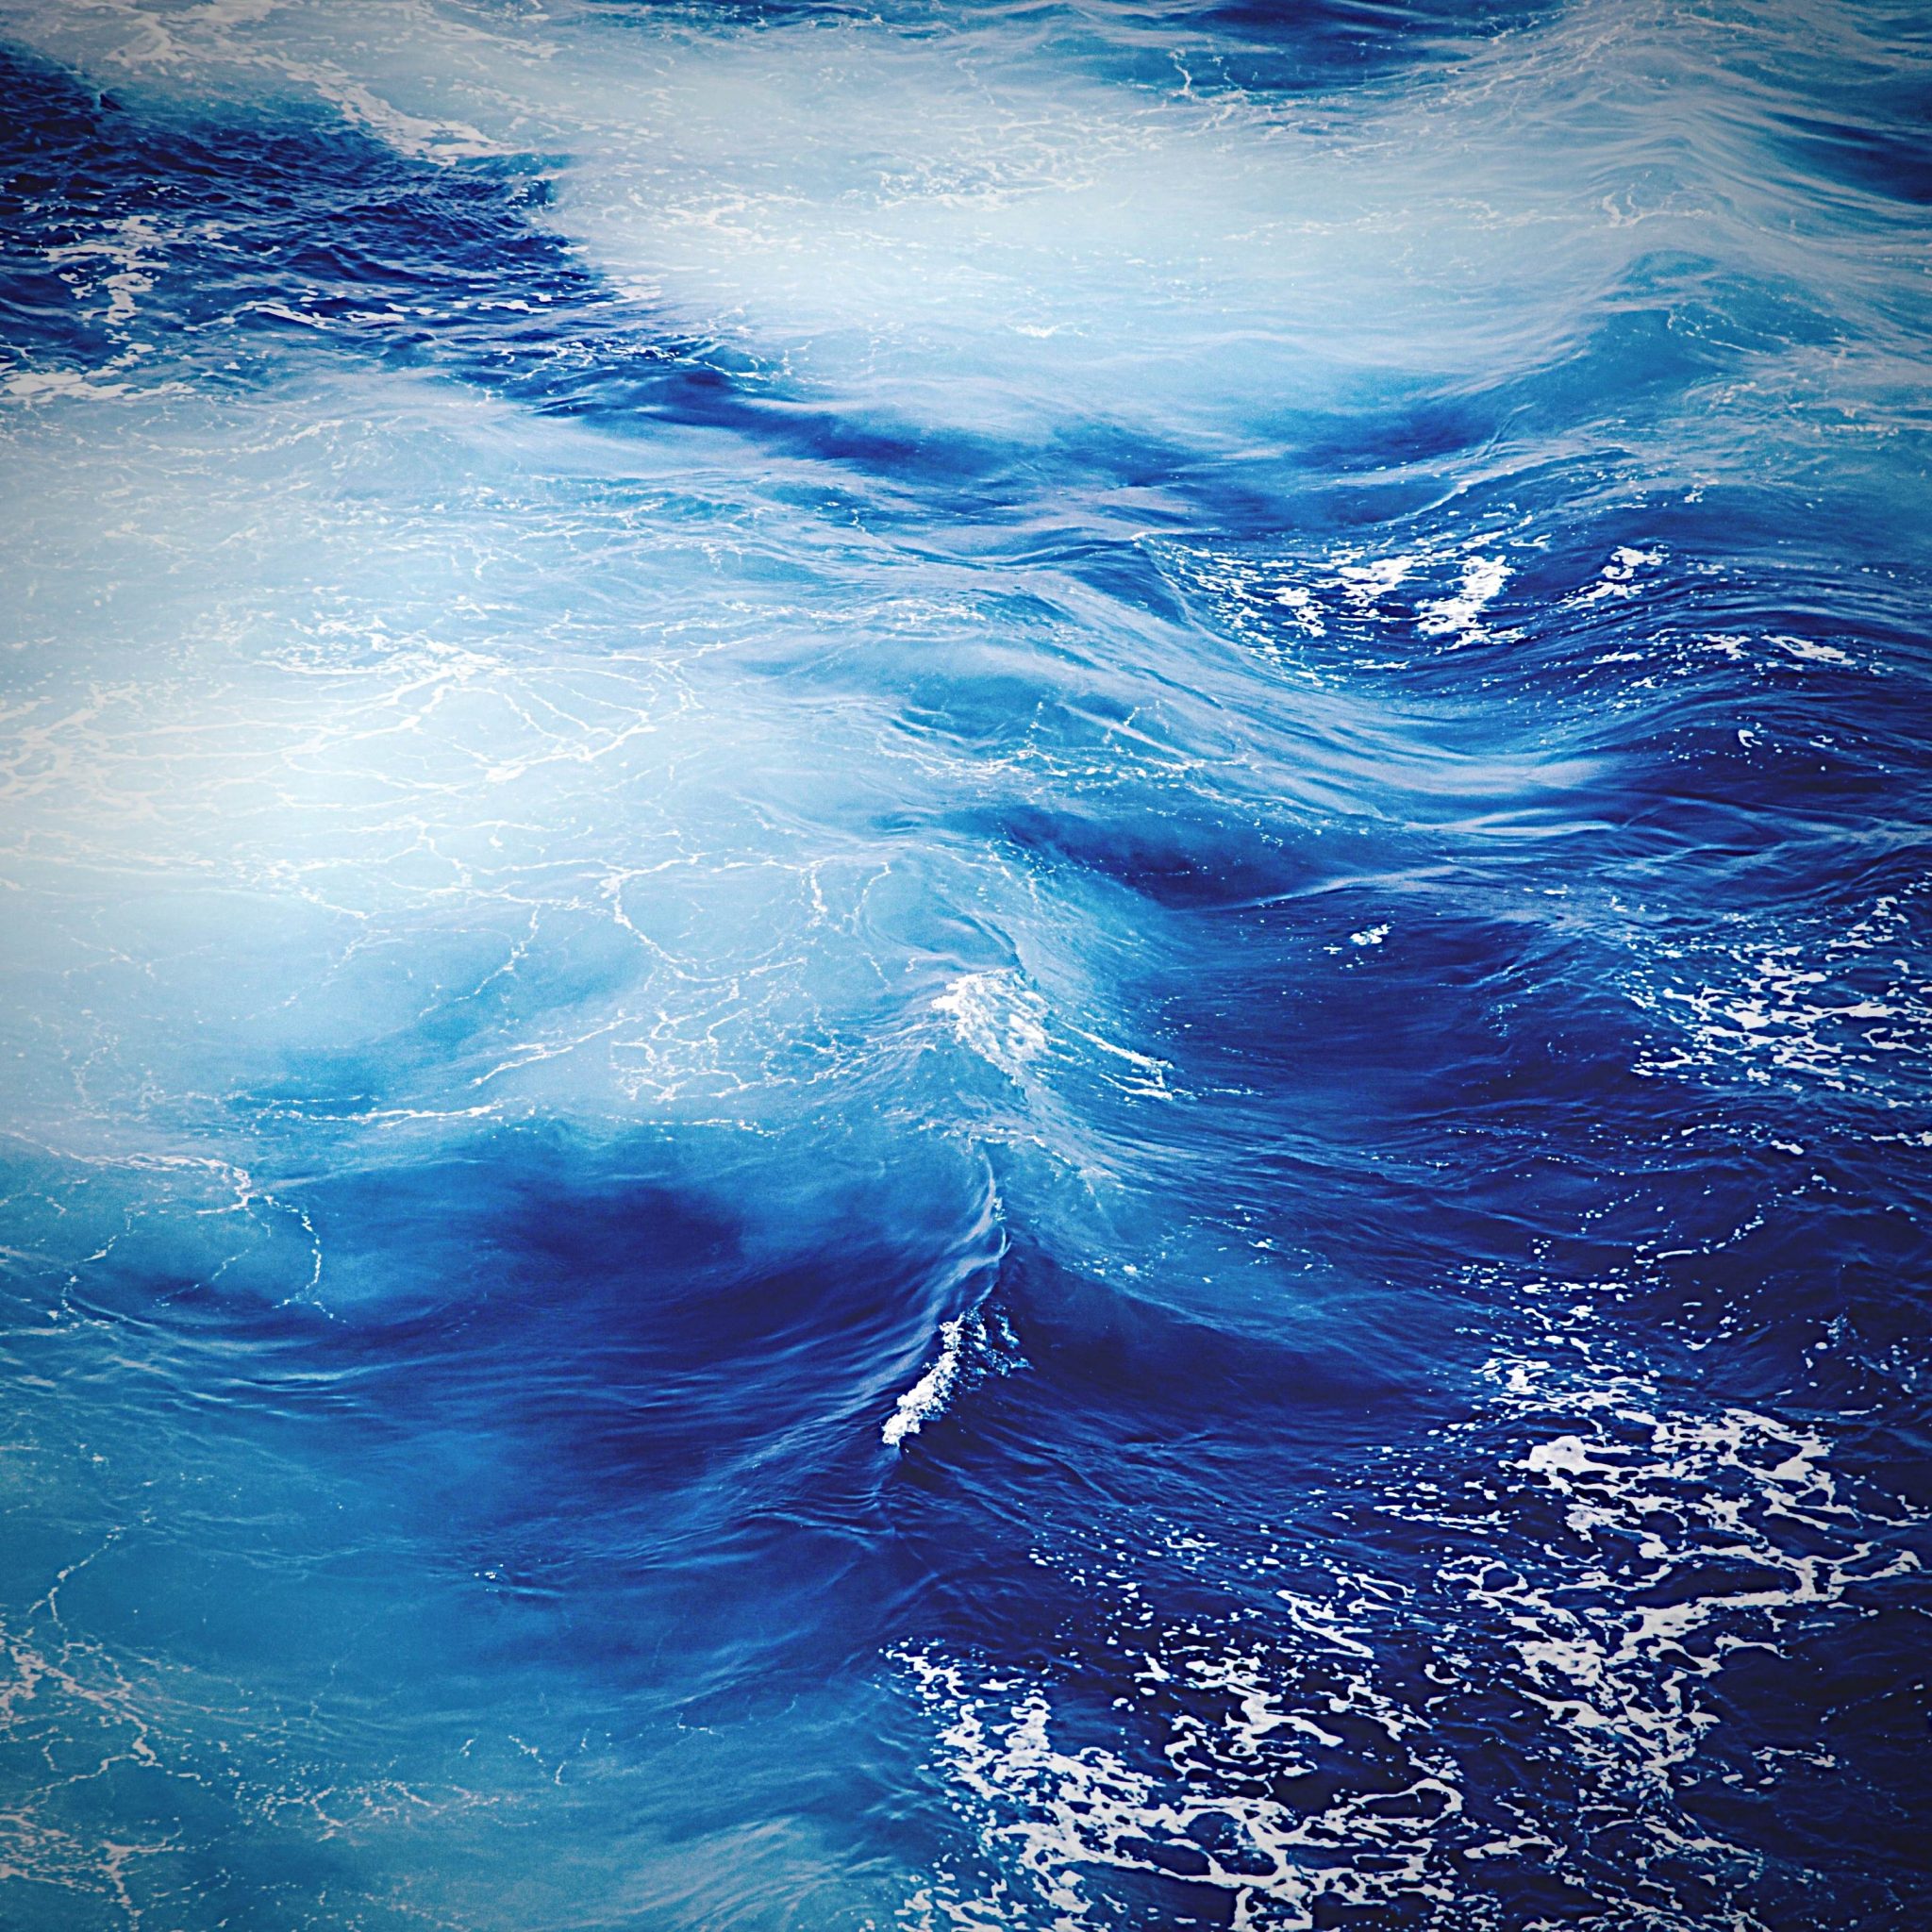 2048x2048 wallpapers iPad retina Ocean Sea Water Wave Blue iPad Wallpaper 2048x2048 pixels resolution